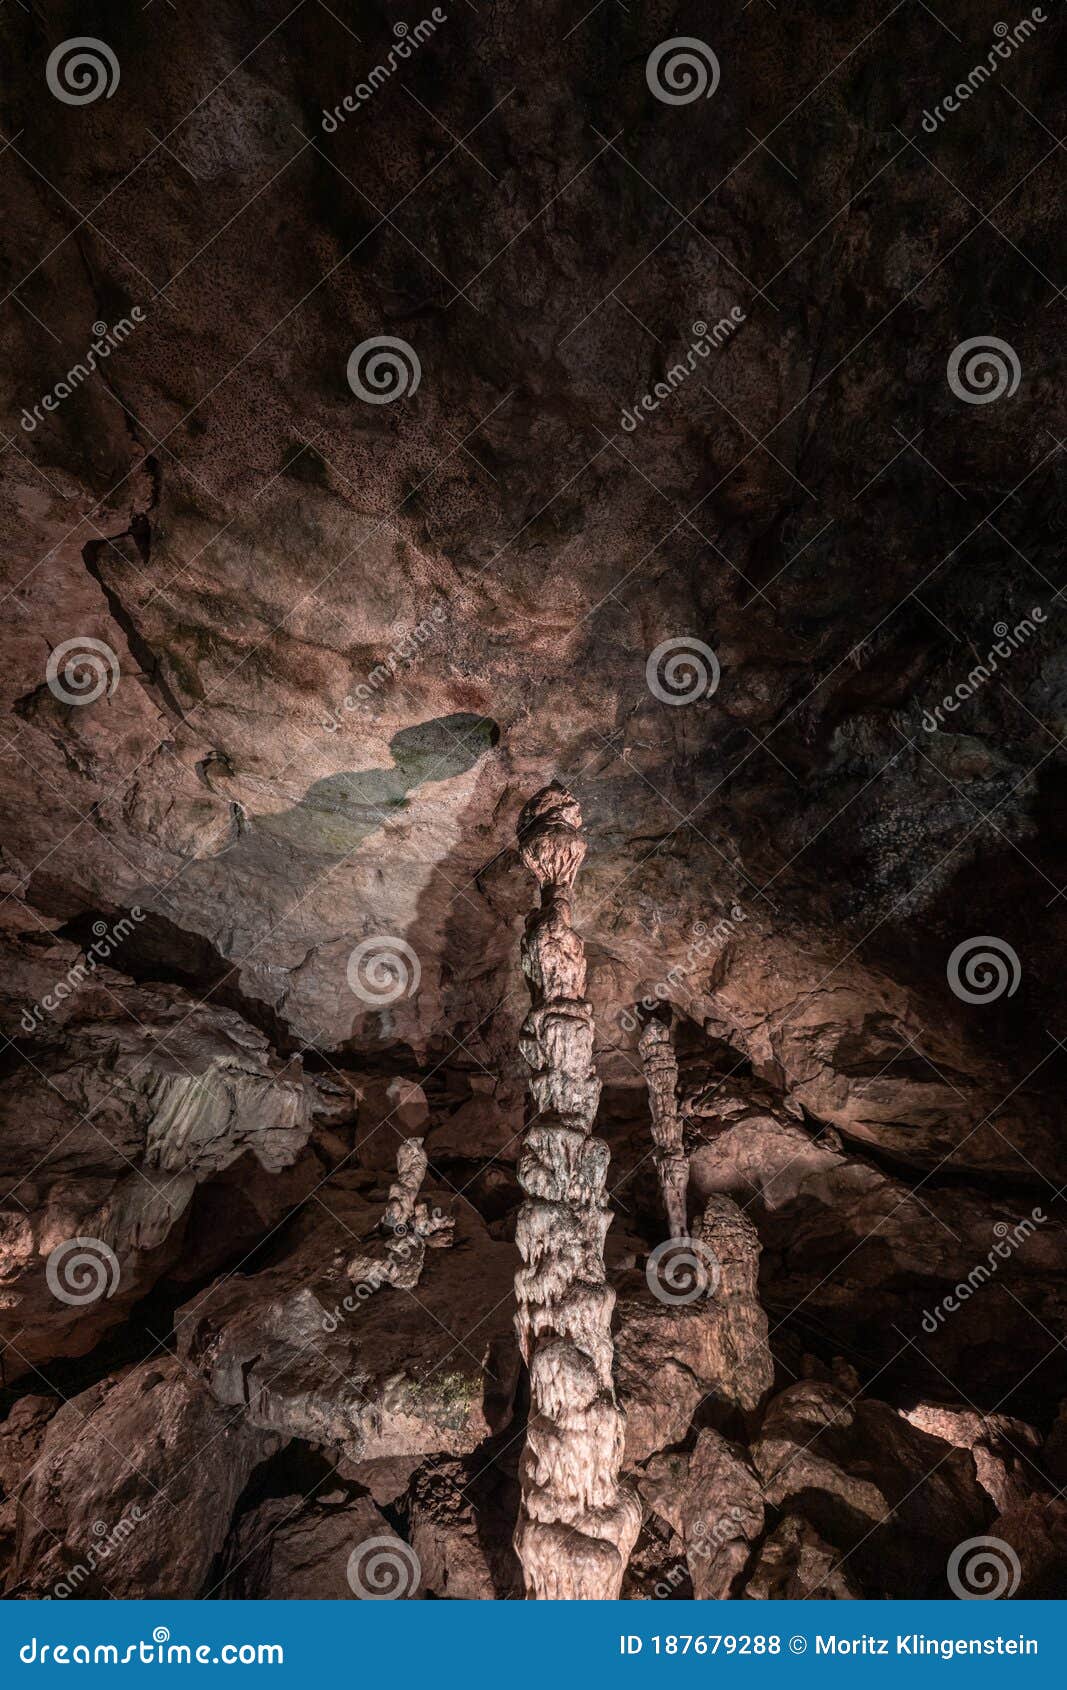 inside the mysterious flowstone cave `nebelhÃÂ¶hle` with stalagmites and stalactites in germany